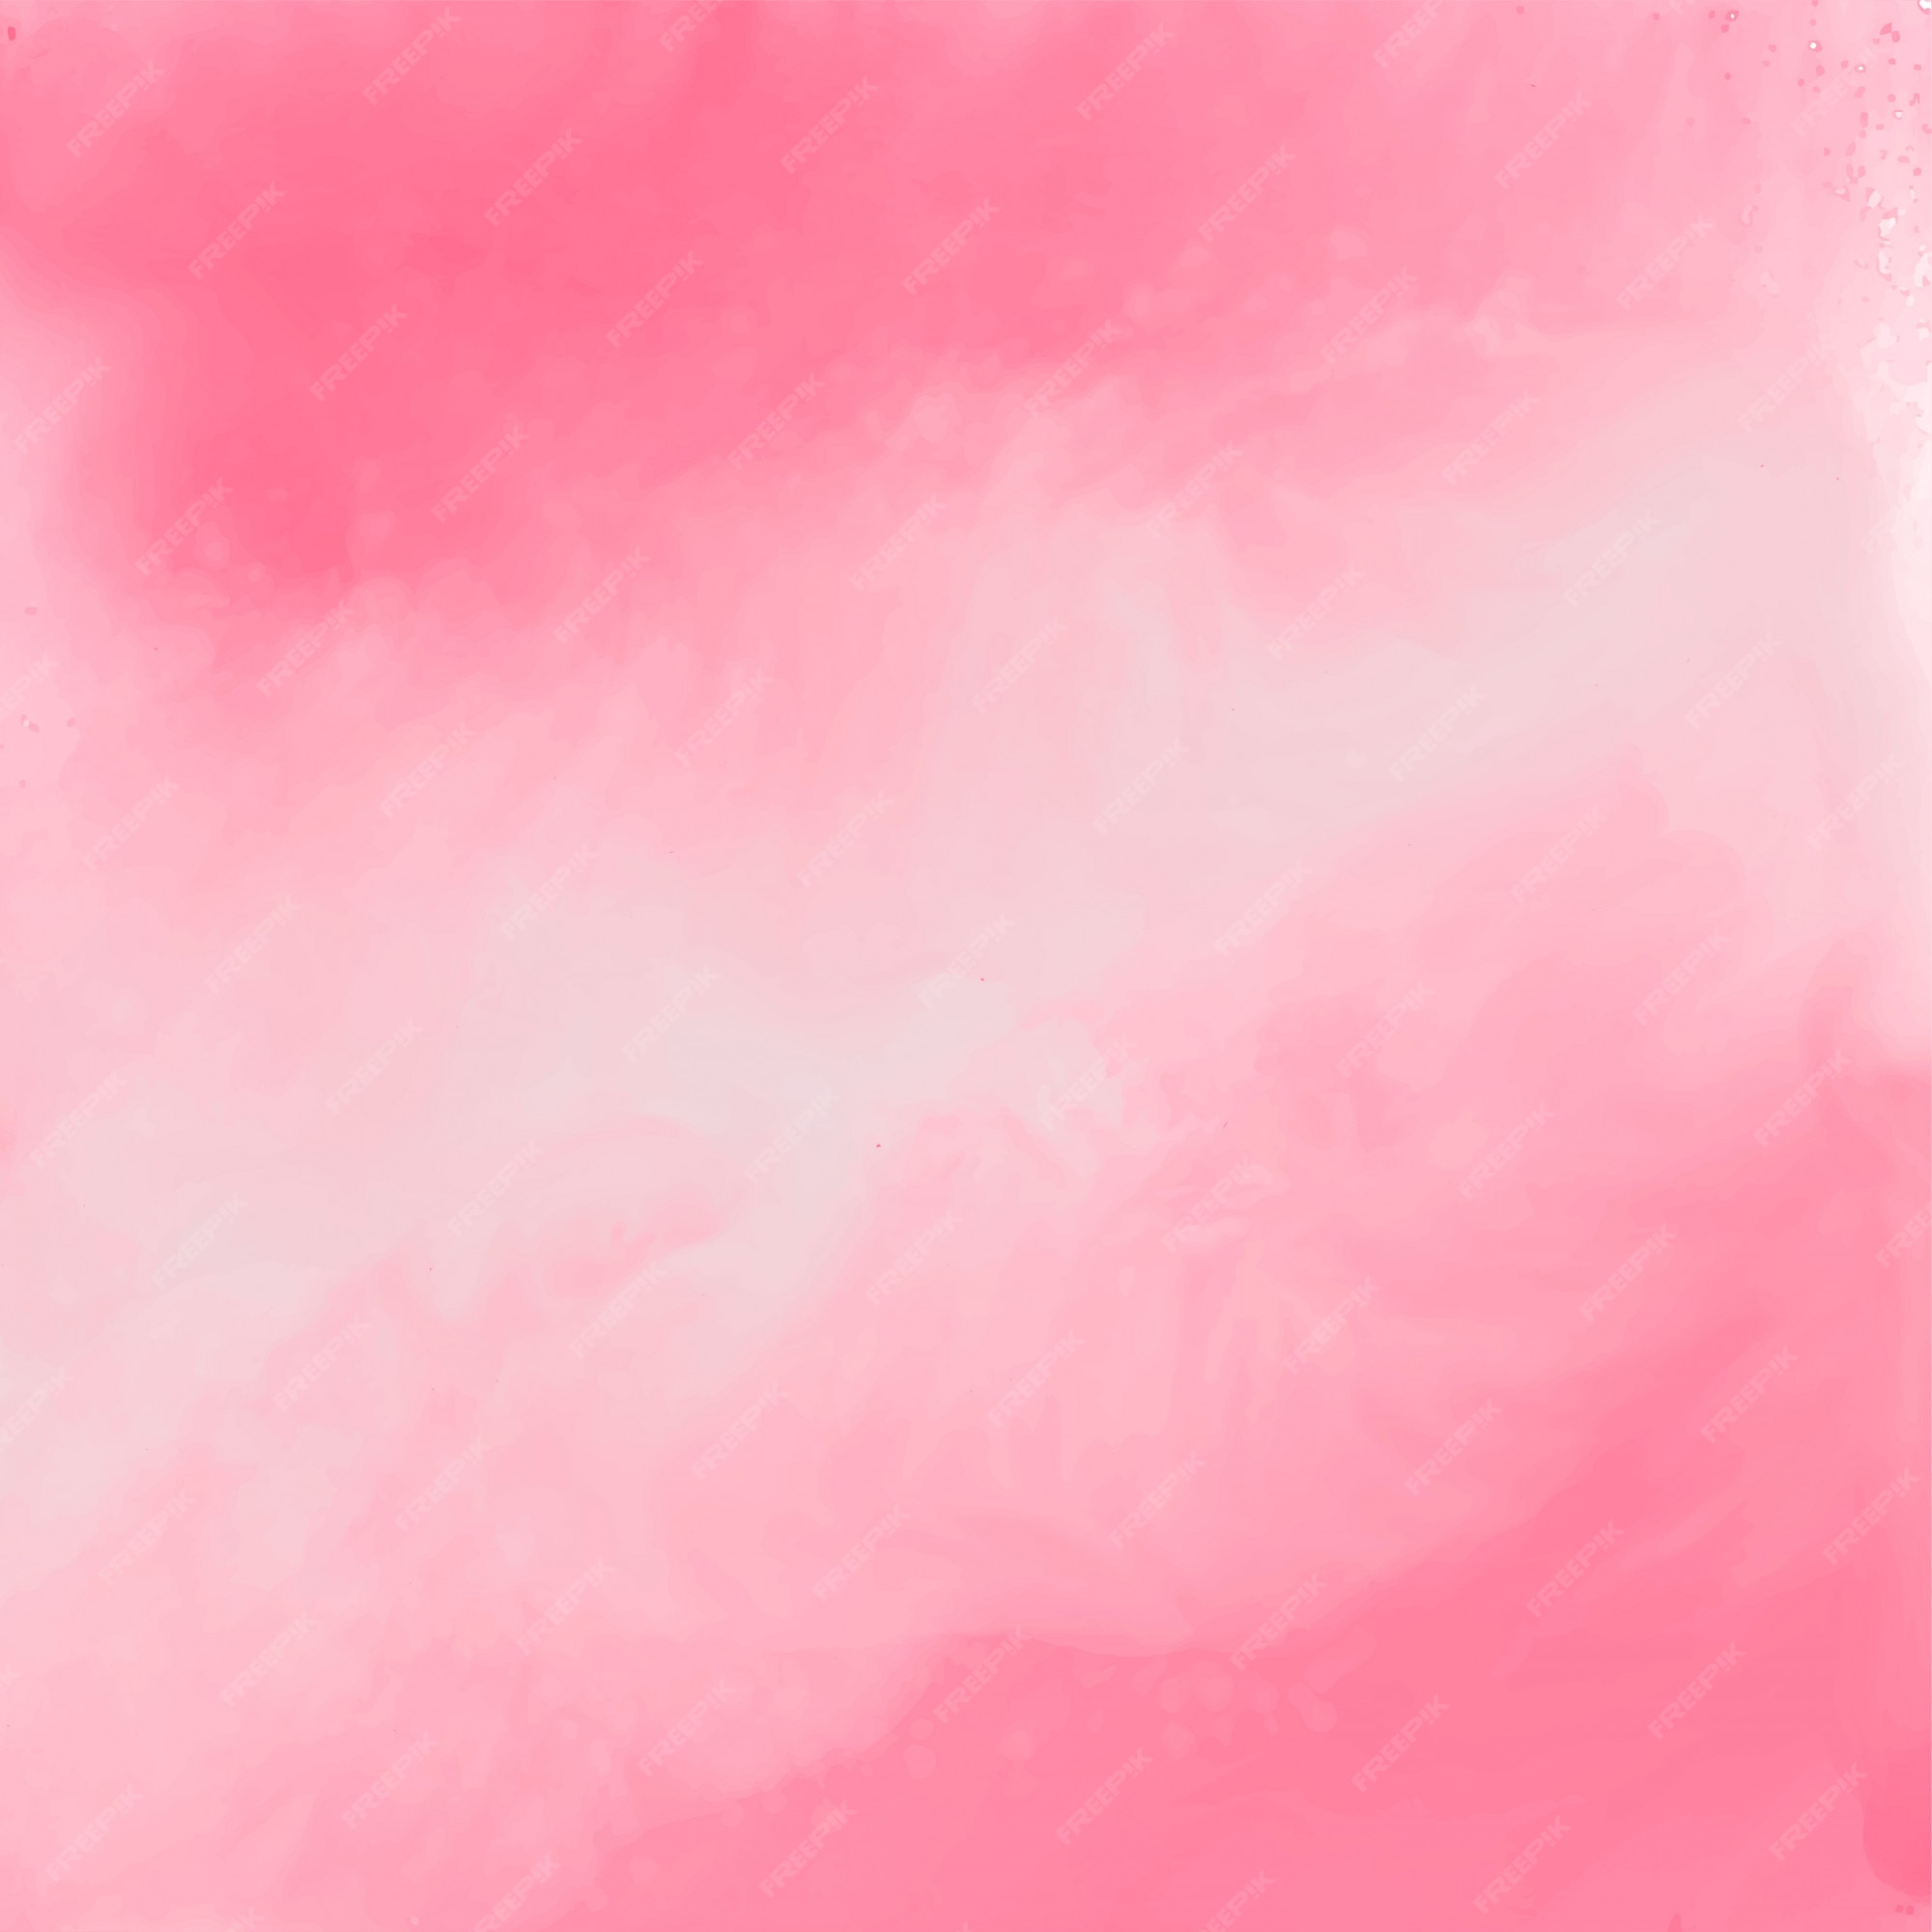 Free Vector | Elegant pink watercolor texture background